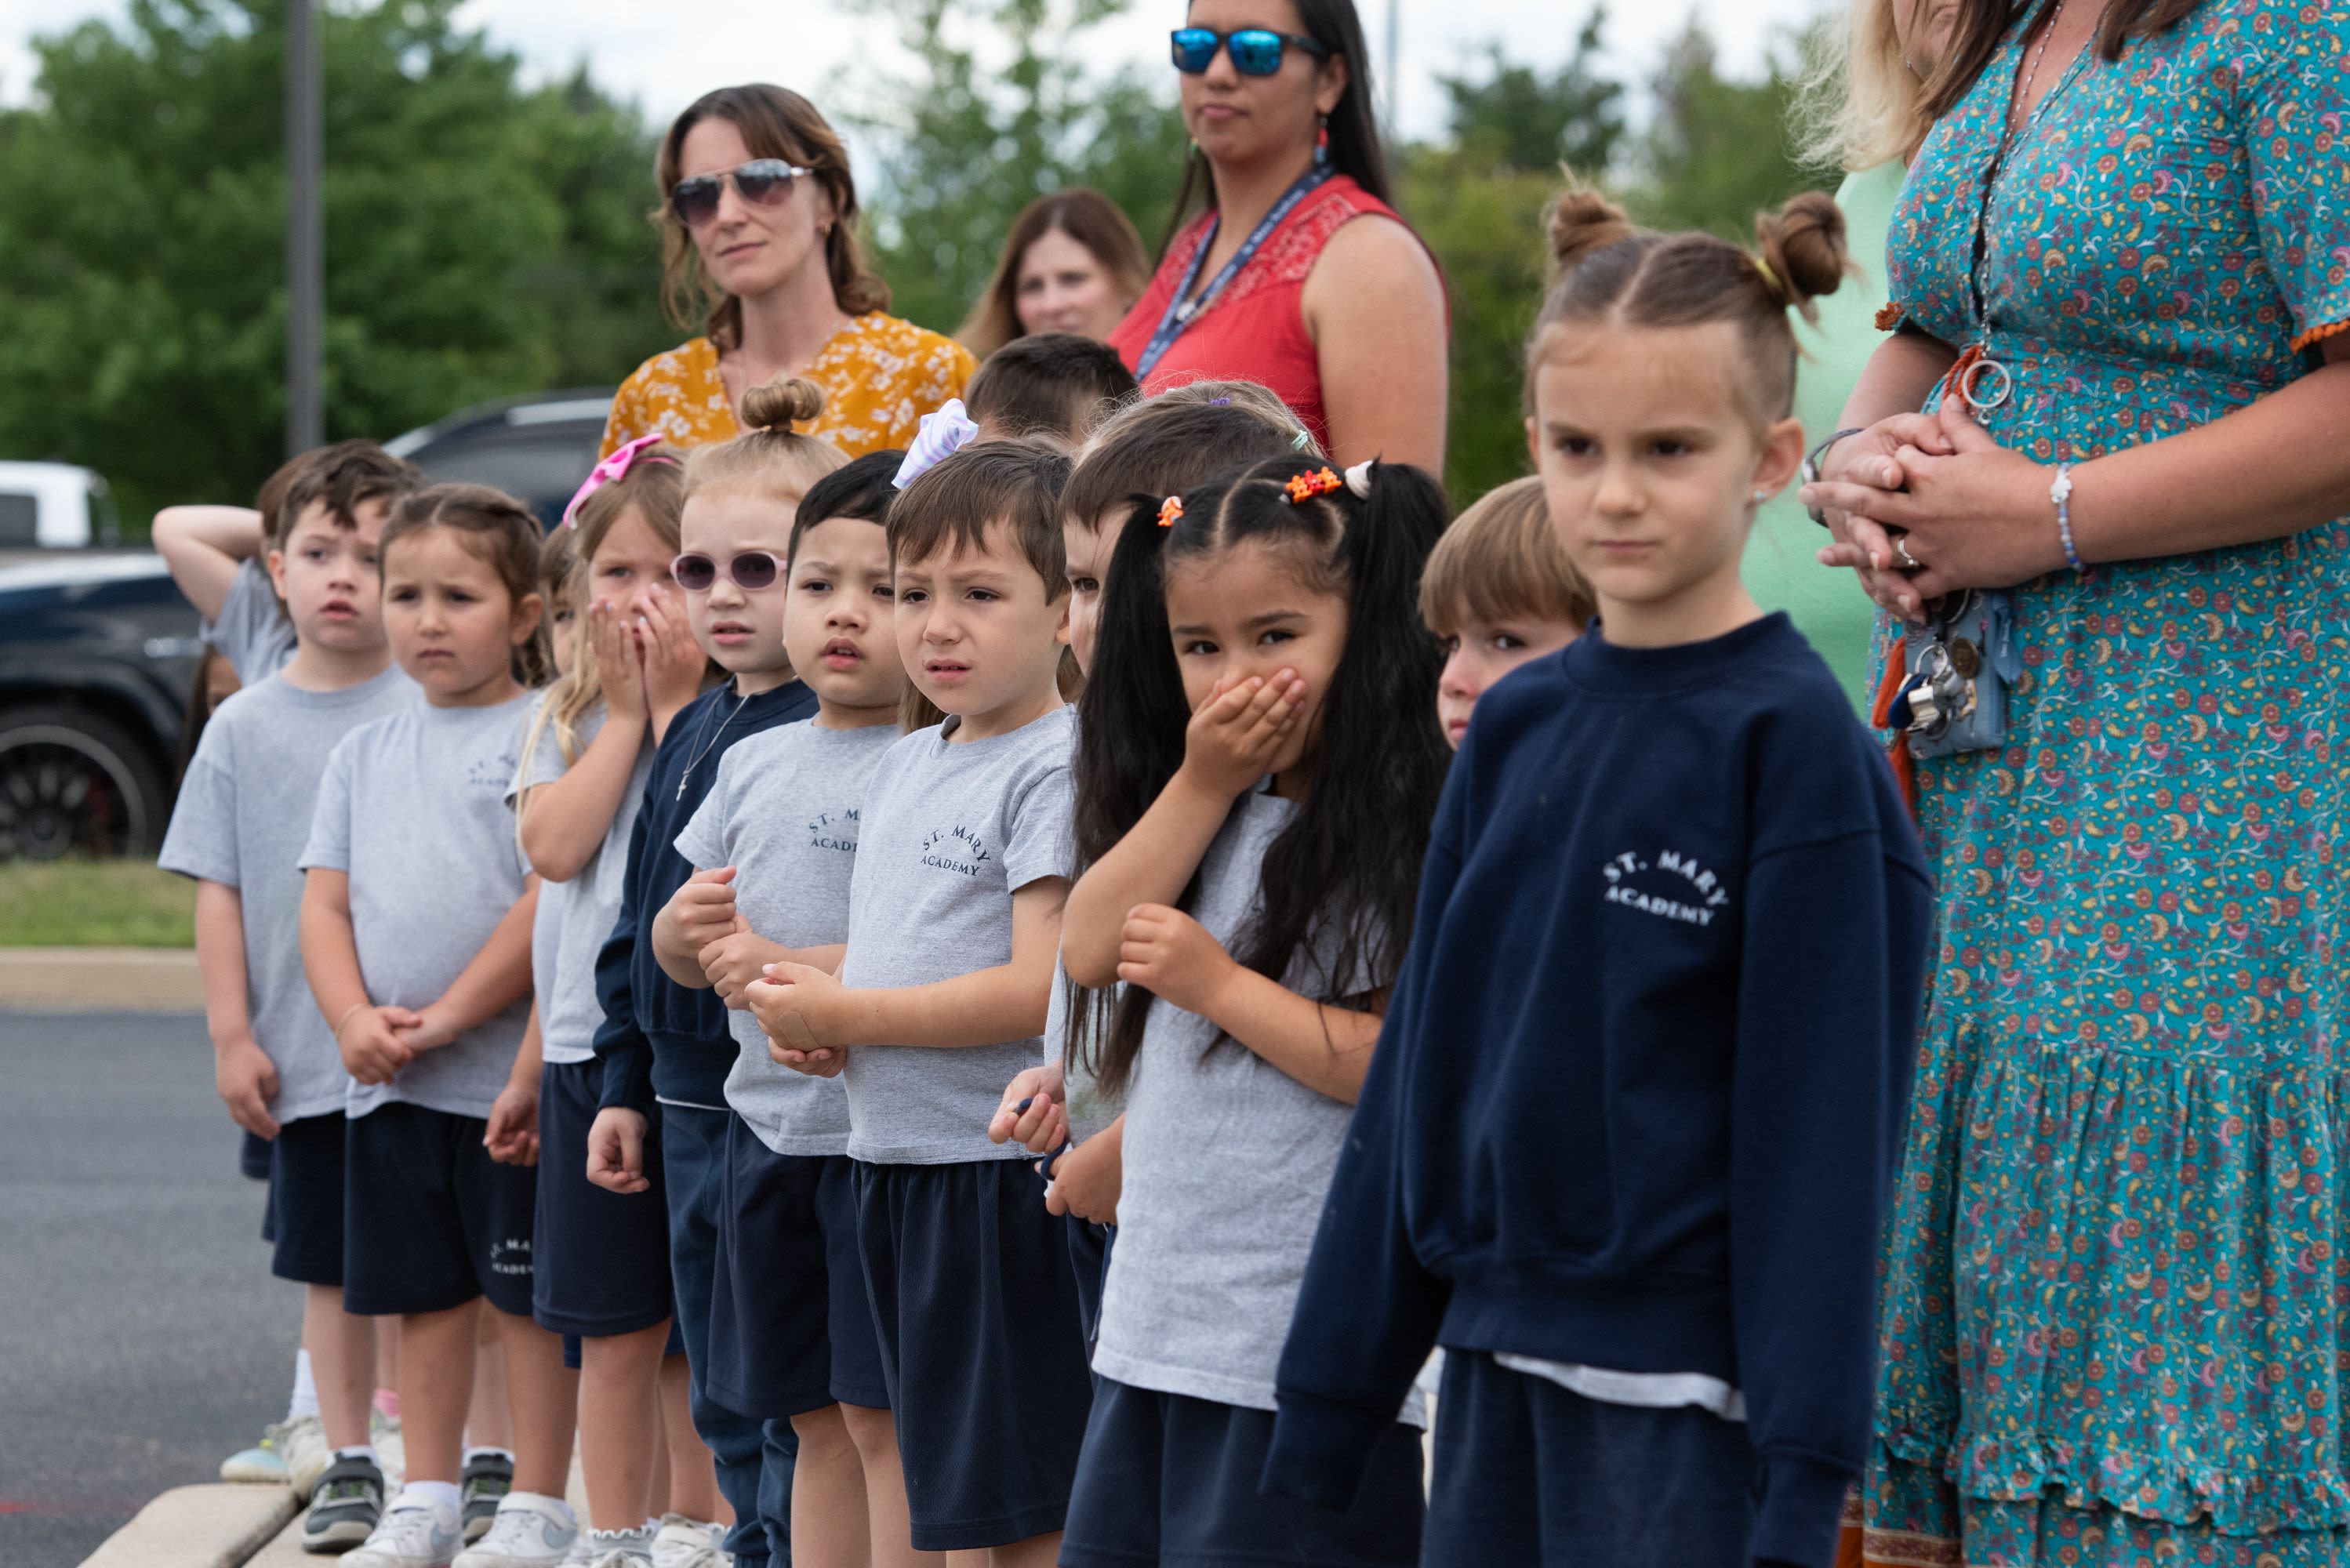 Jersey Shore children encounter Jesus at stop on National Eucharistic Pilgrimage